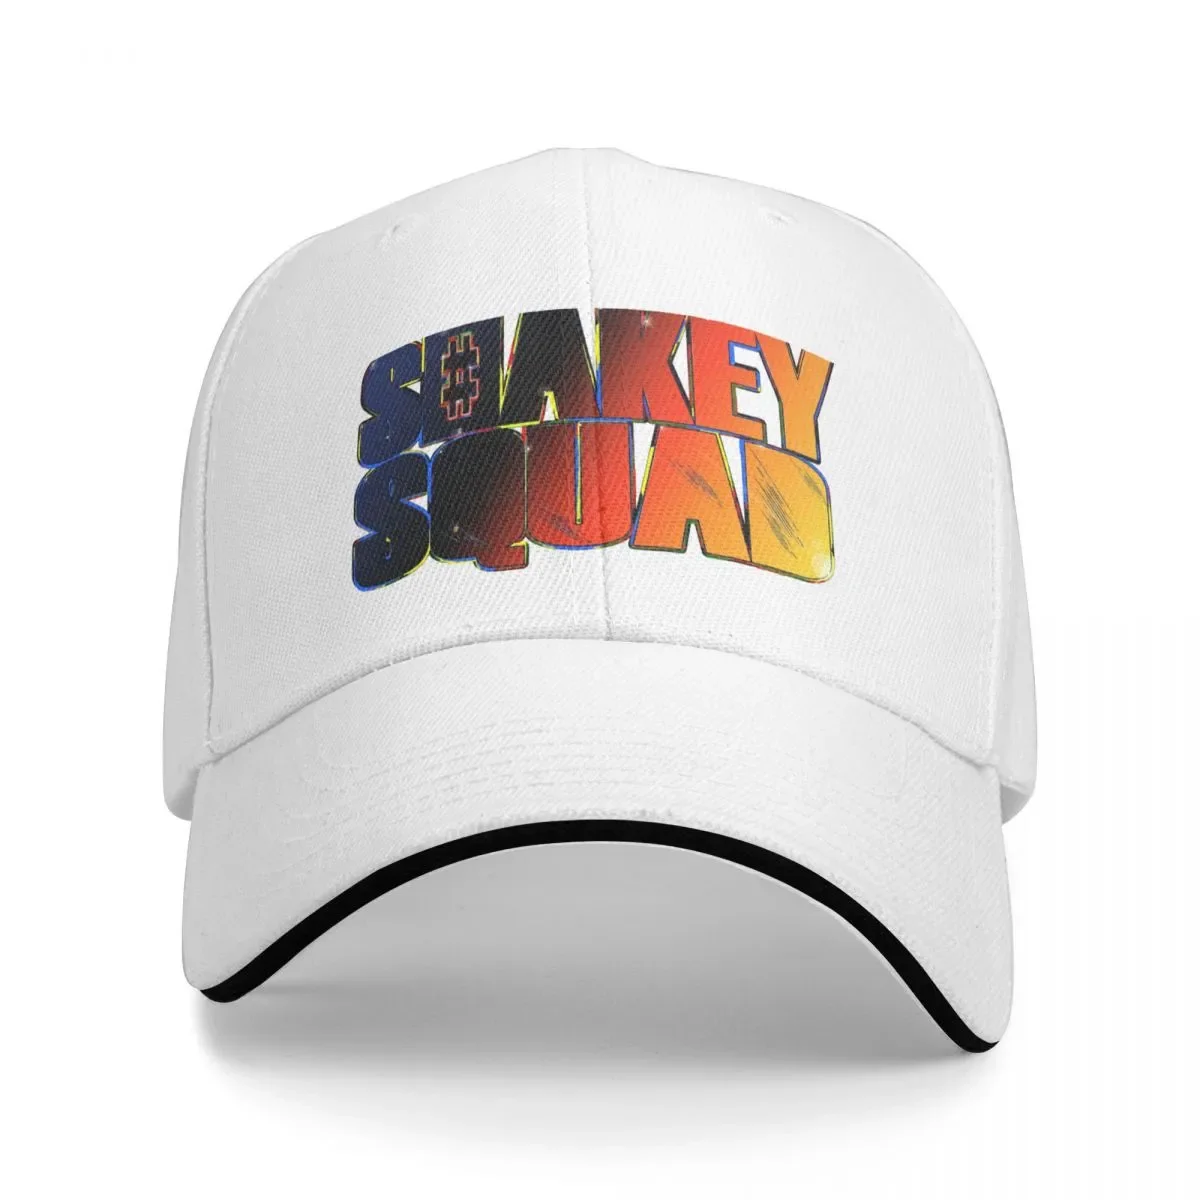 

New Shakey SquadCap Baseball Cap Hood thermal visor hat for men Women's